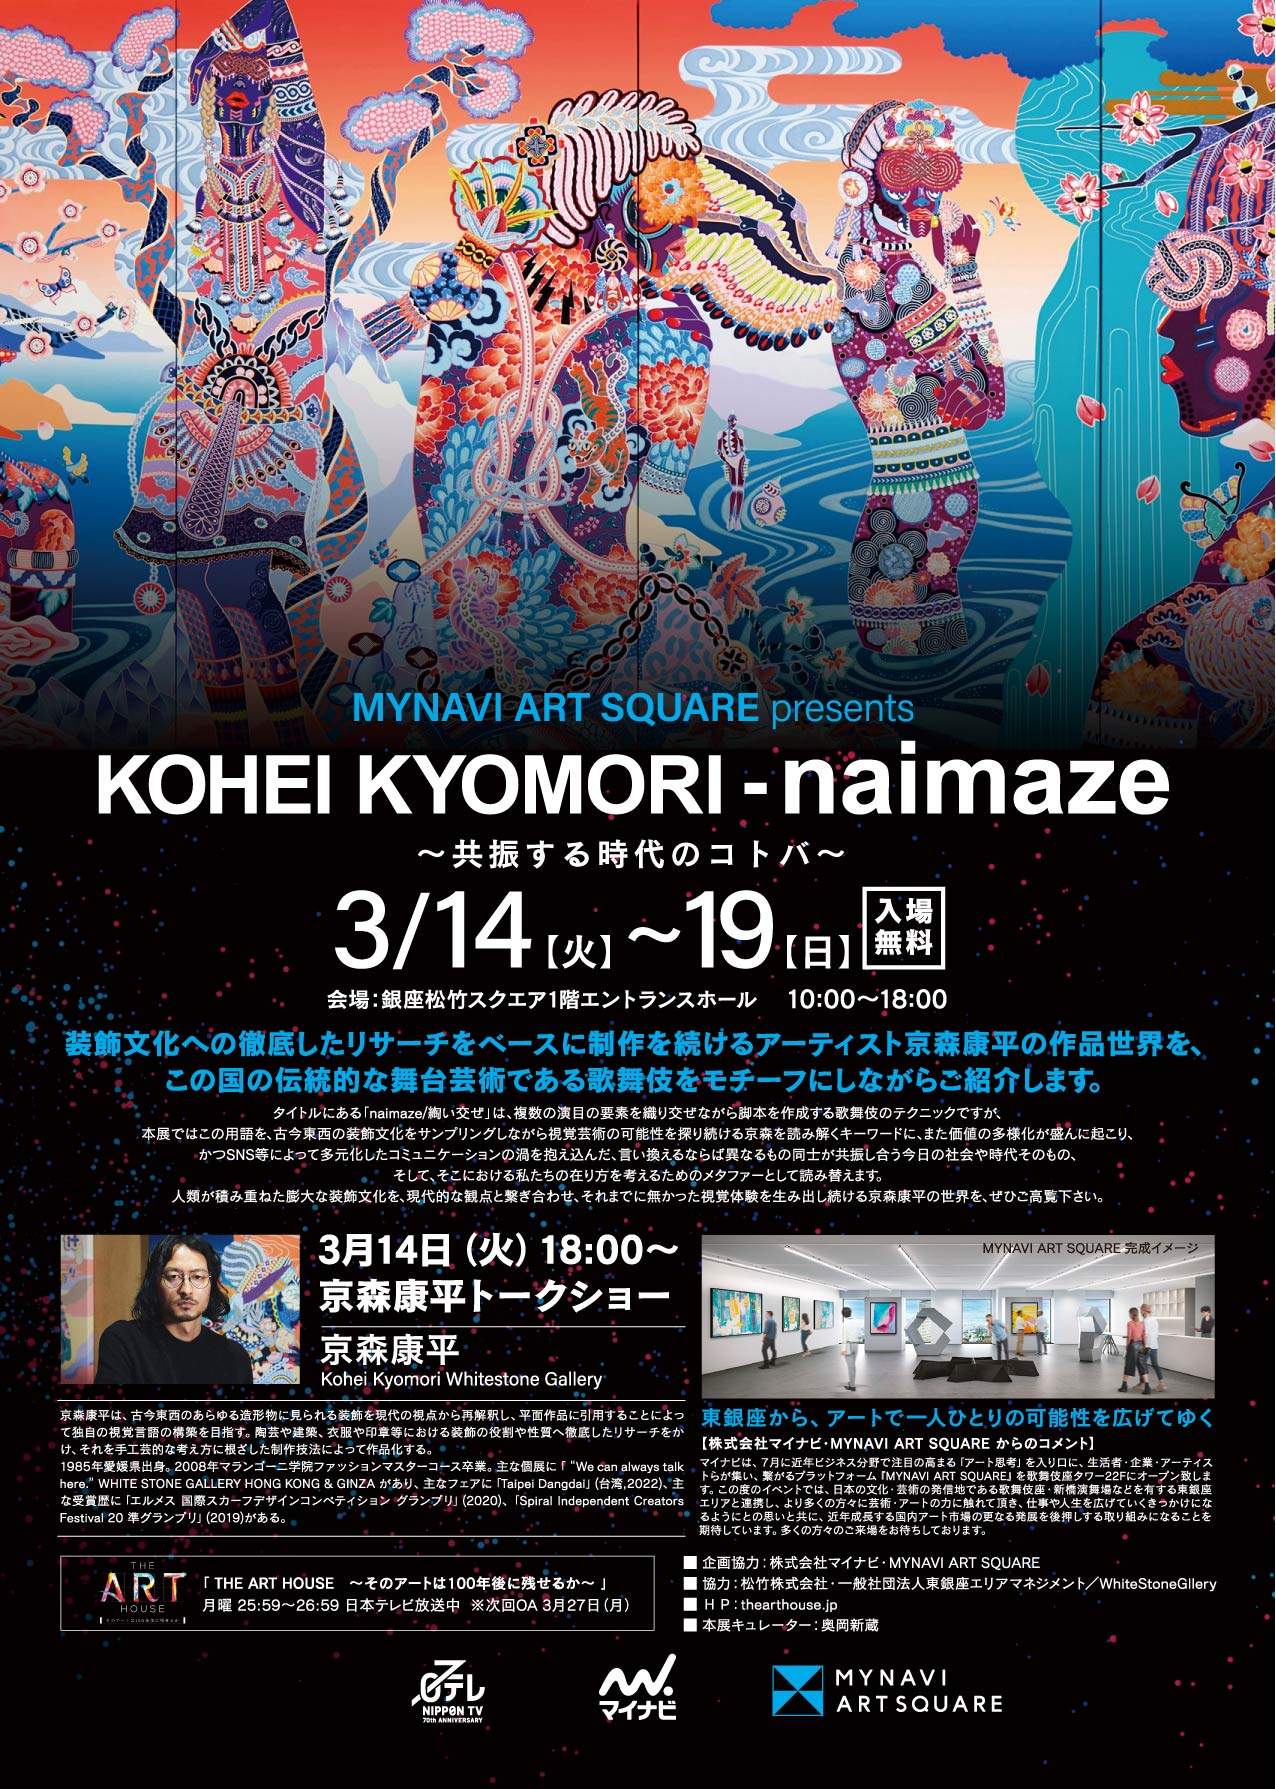 「MYNAVI ART SQUARE　Presents KOHEI KYOMORI -naimaza ～共振する時代のコトバ～」を開催いたします